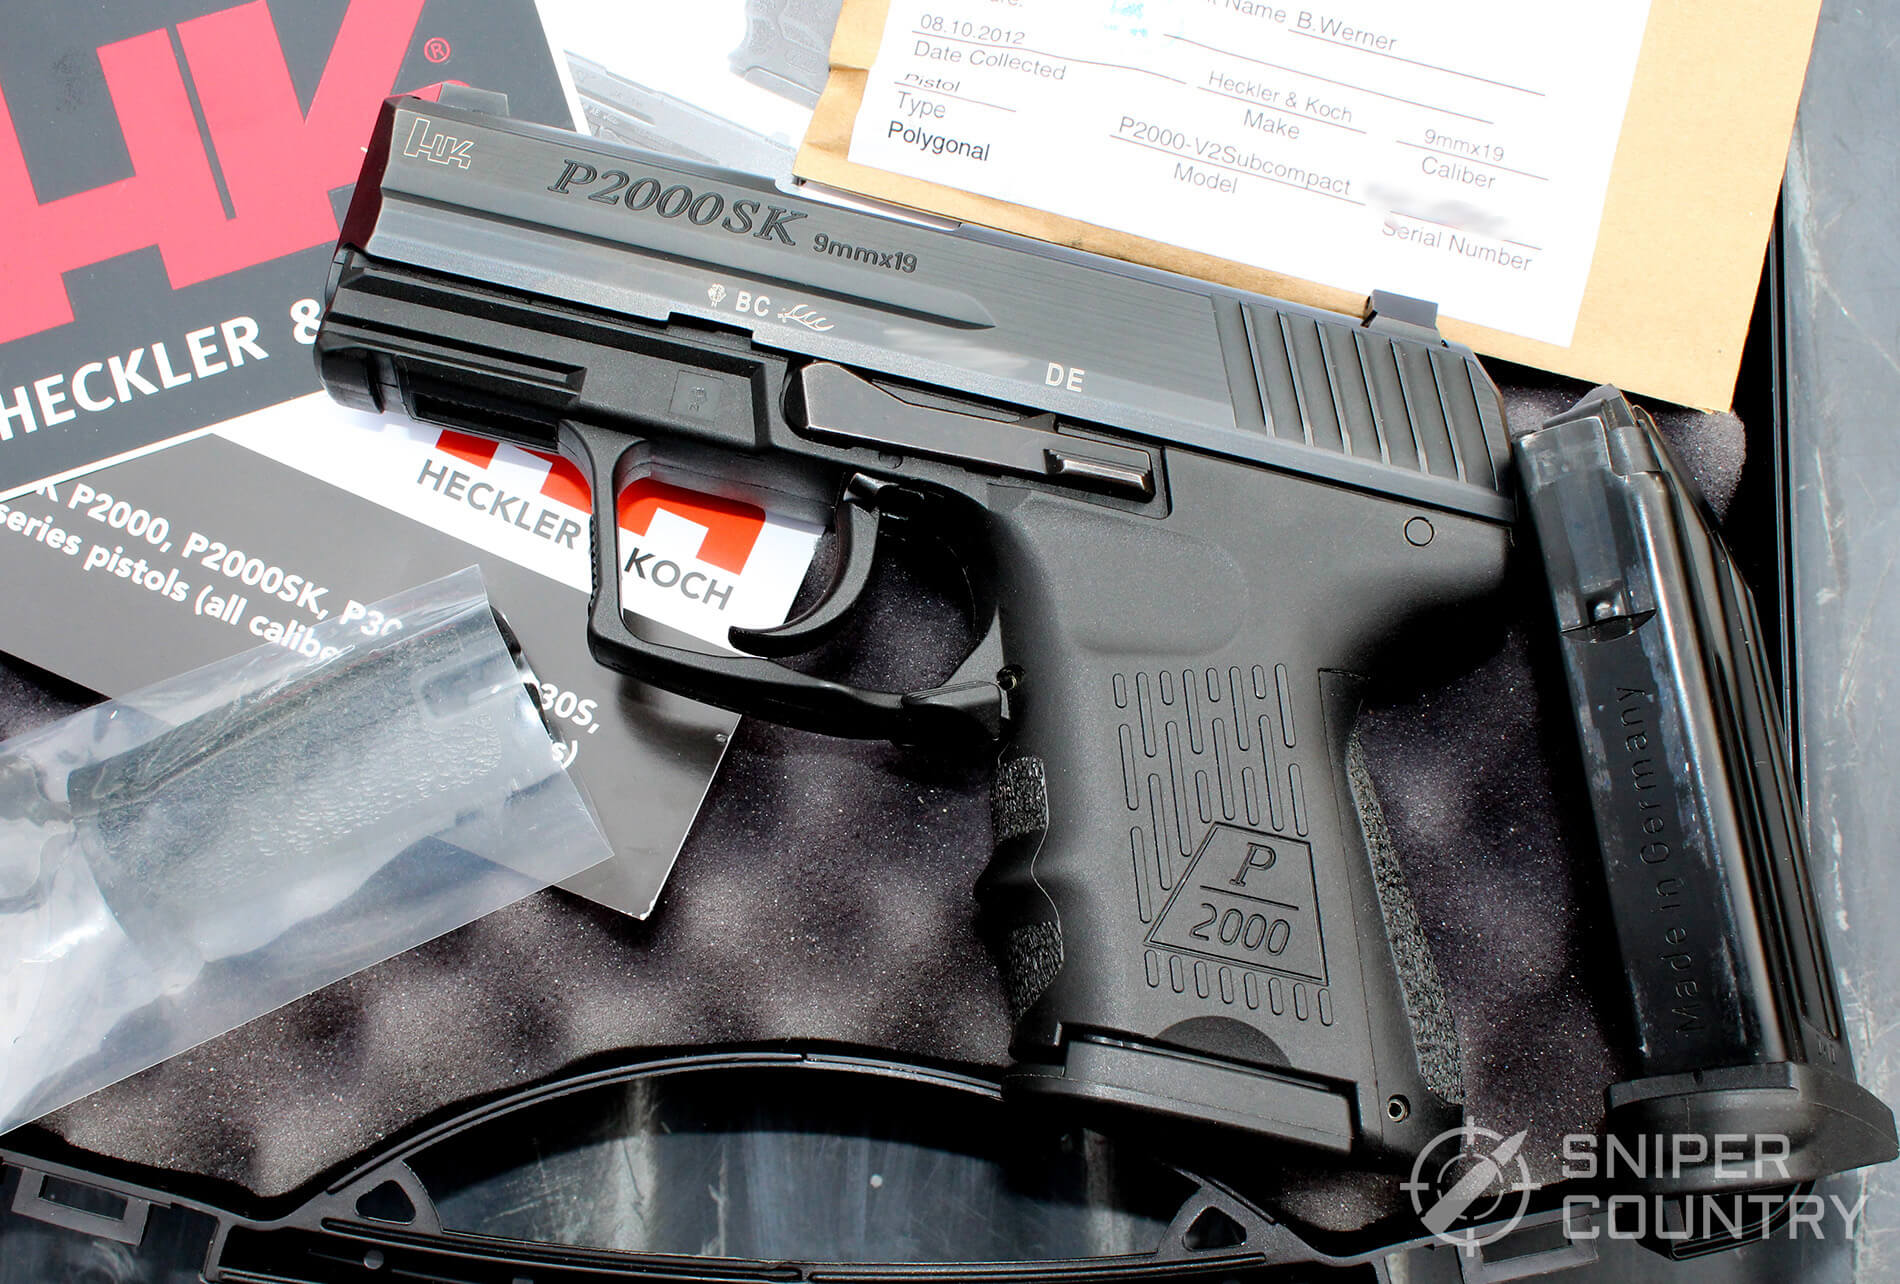 Heckler & Koch USP: A pistol with probably the best ergonomics of